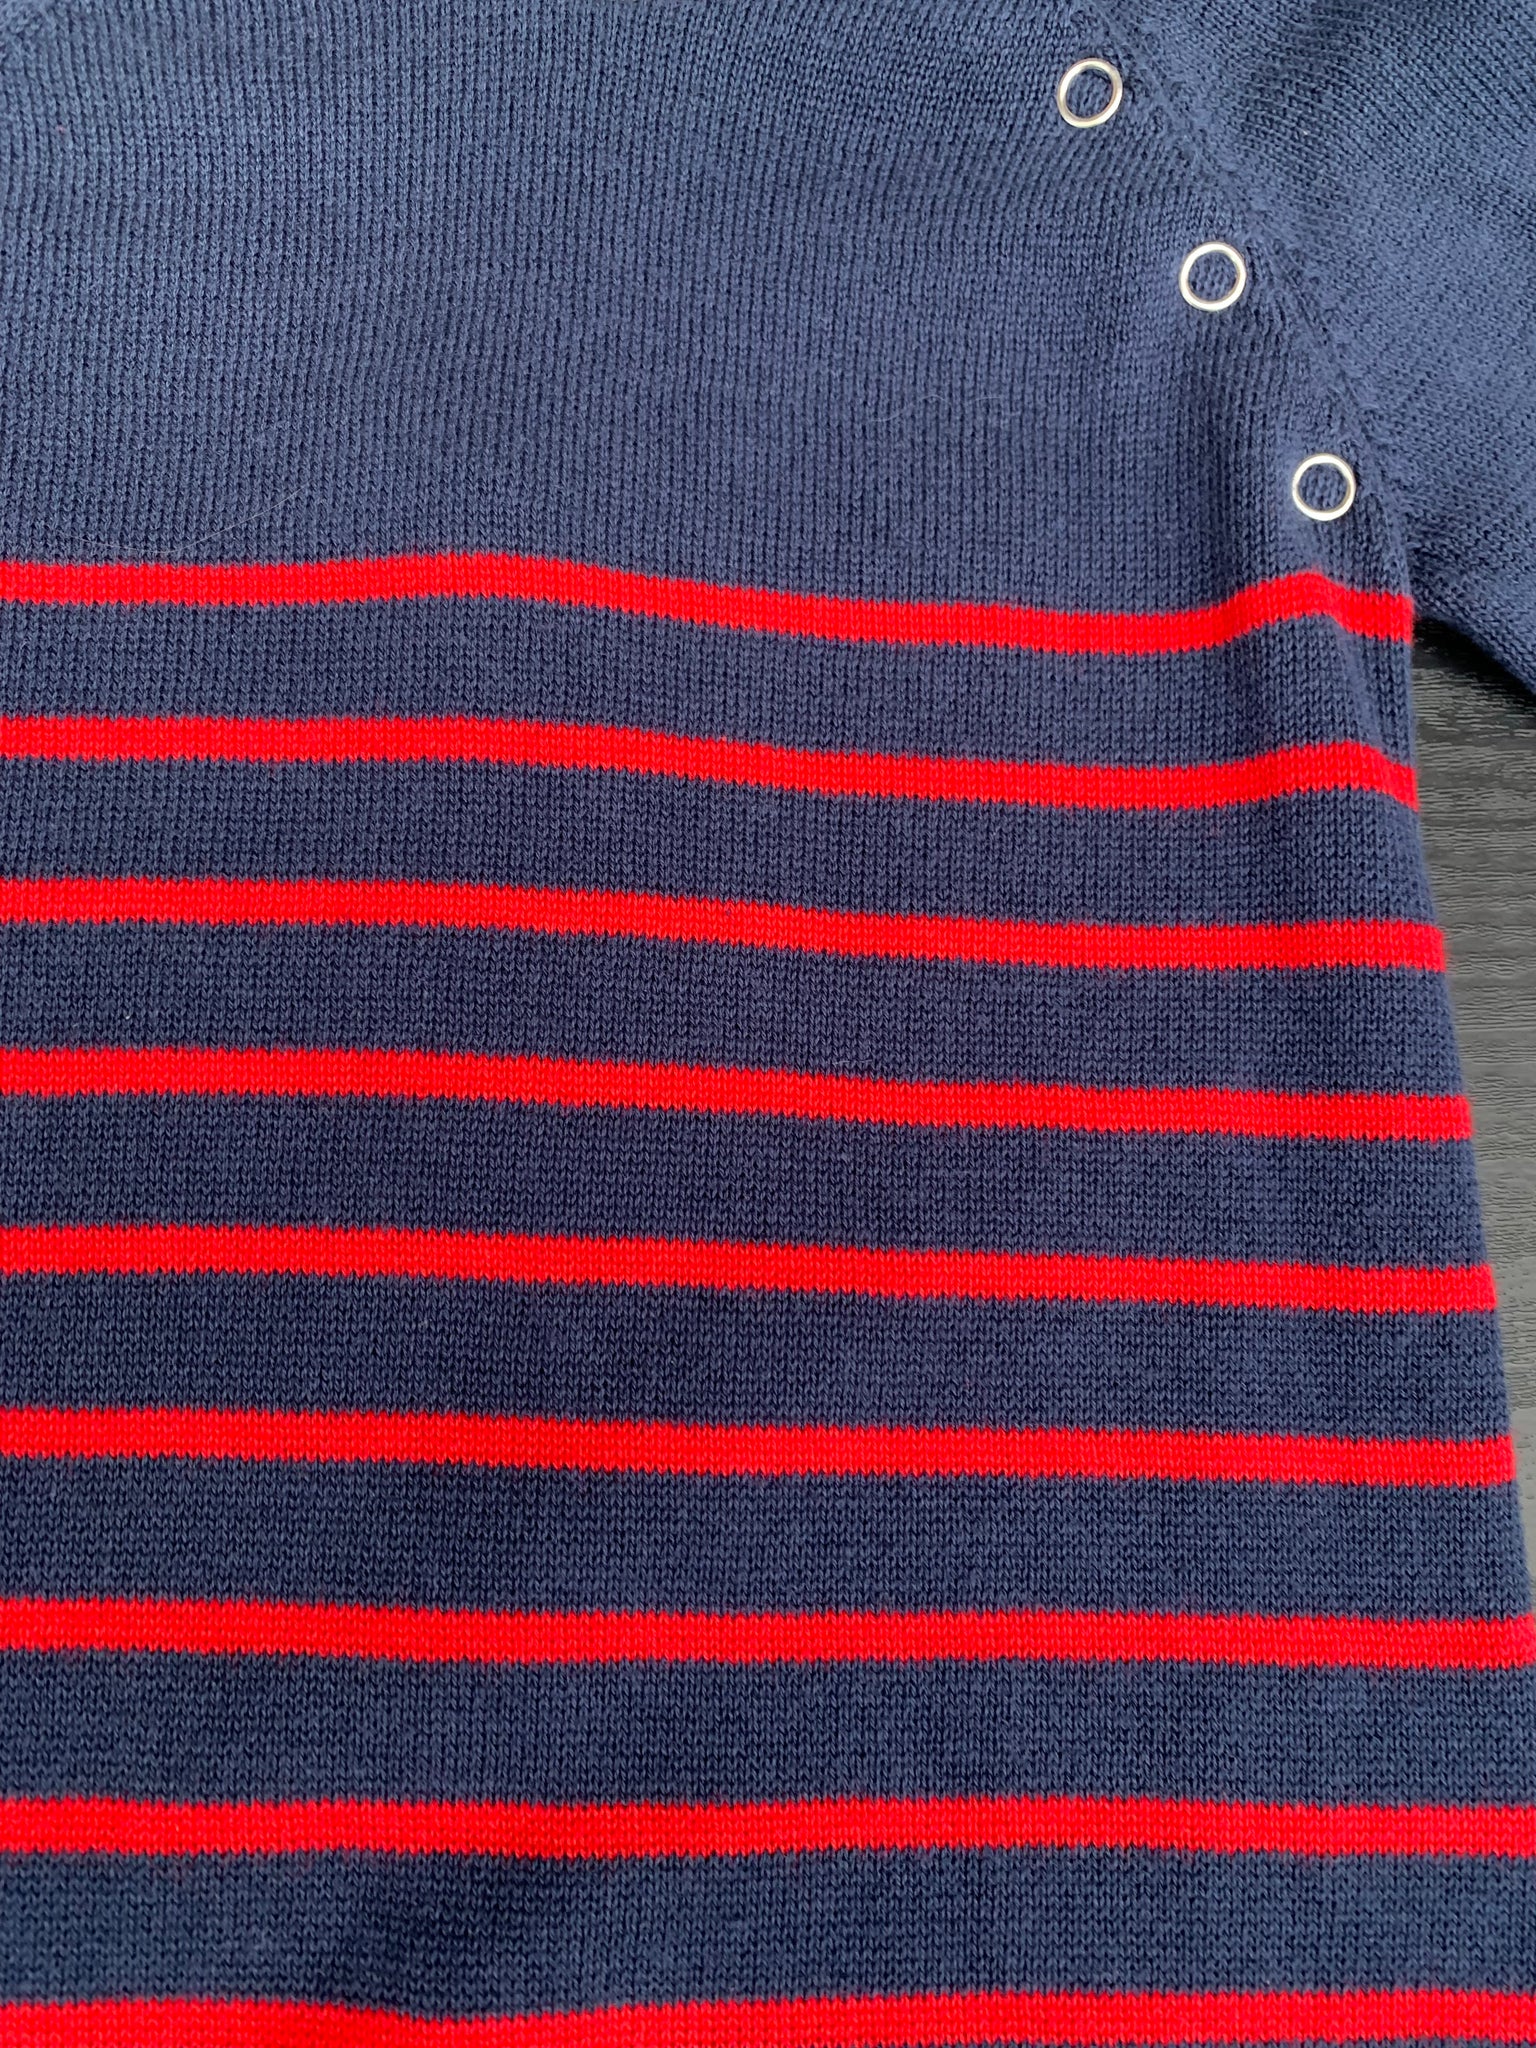 Sweater Knit Stripe Jumpsuit